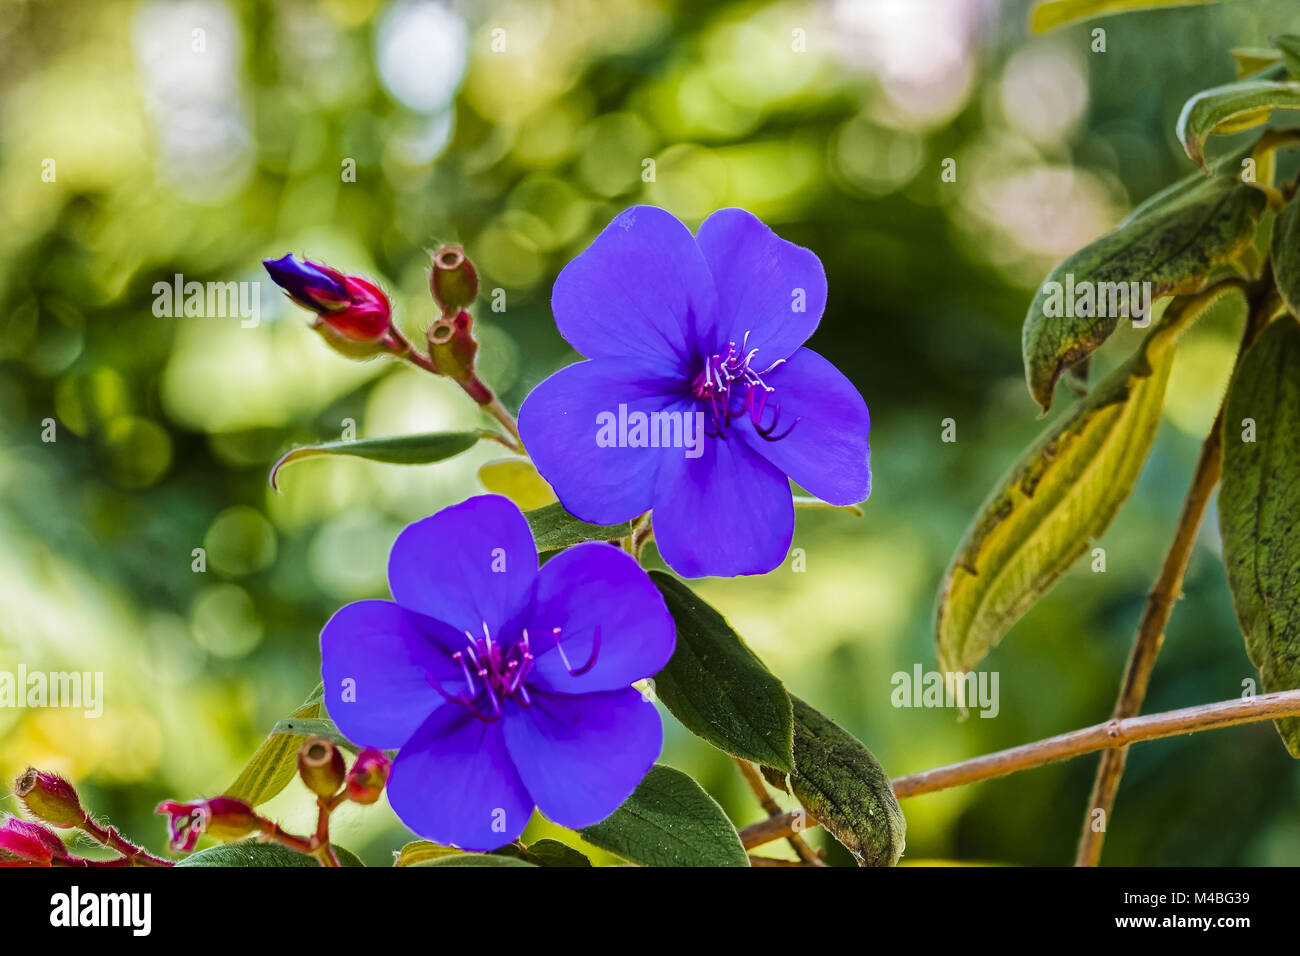 Flor de brasil fotografías e imágenes de alta resolución - Alamy